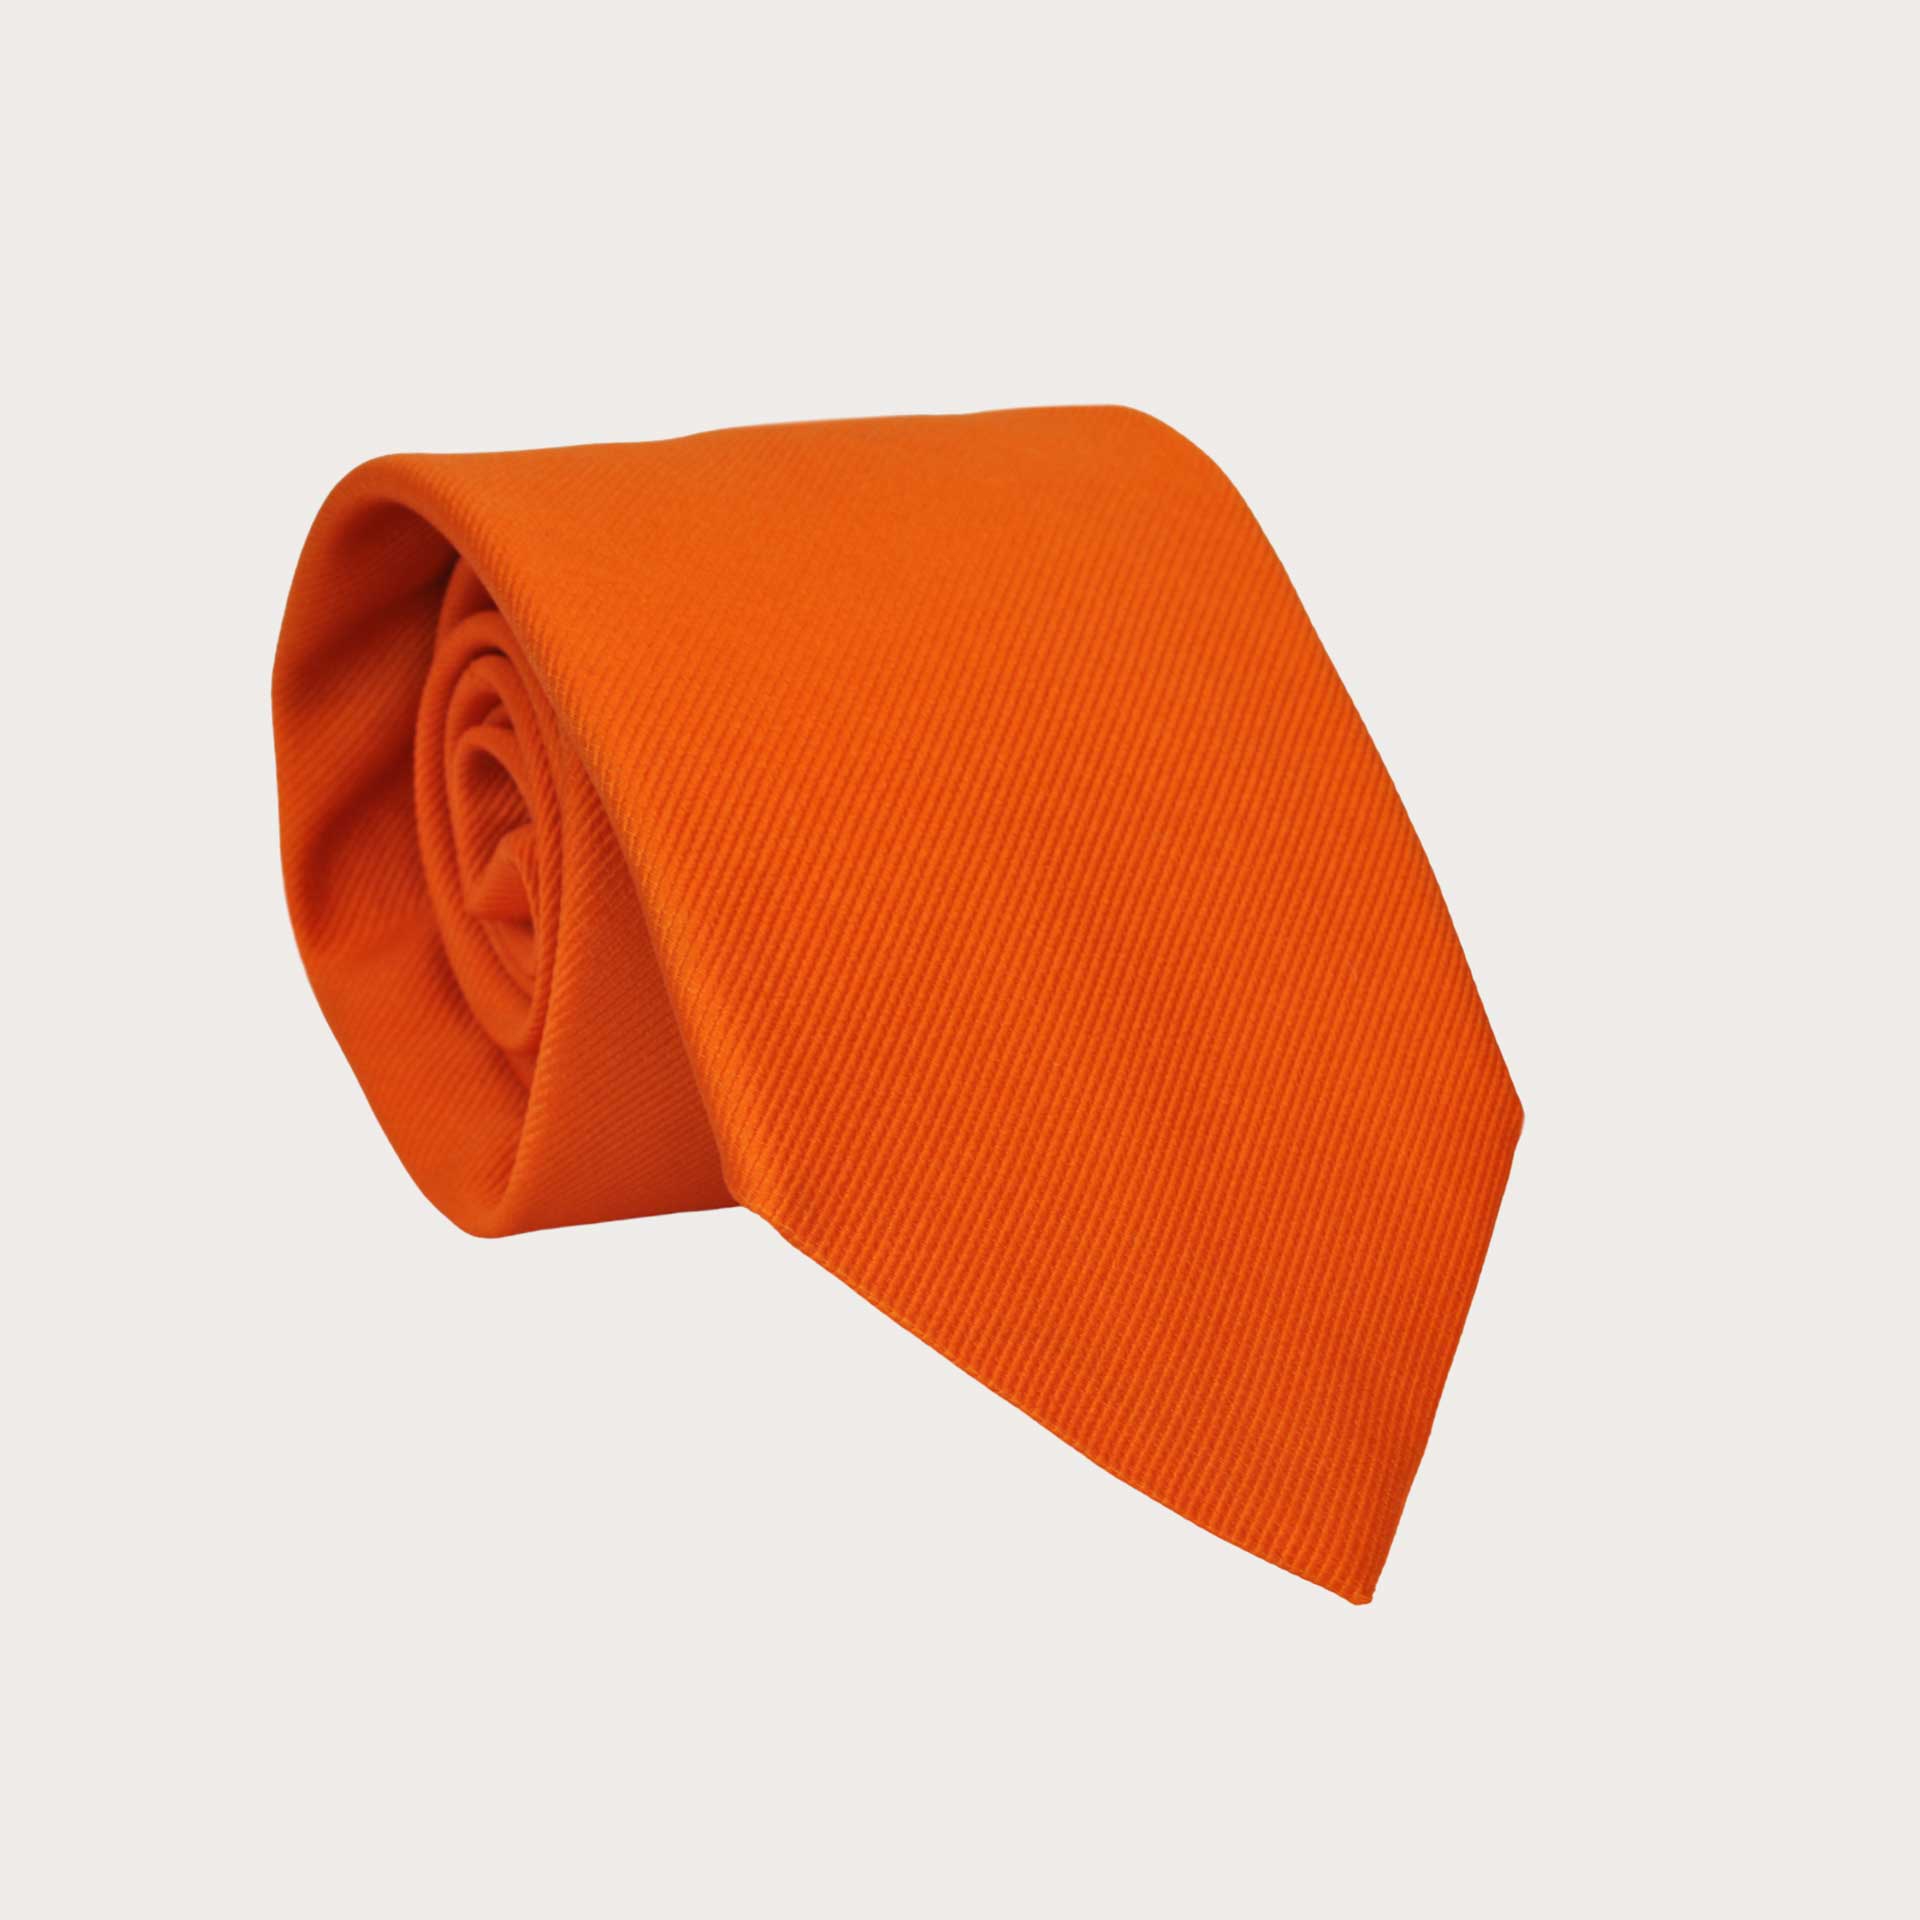 BRUCLE Esclusiva cravatta arancione in seta